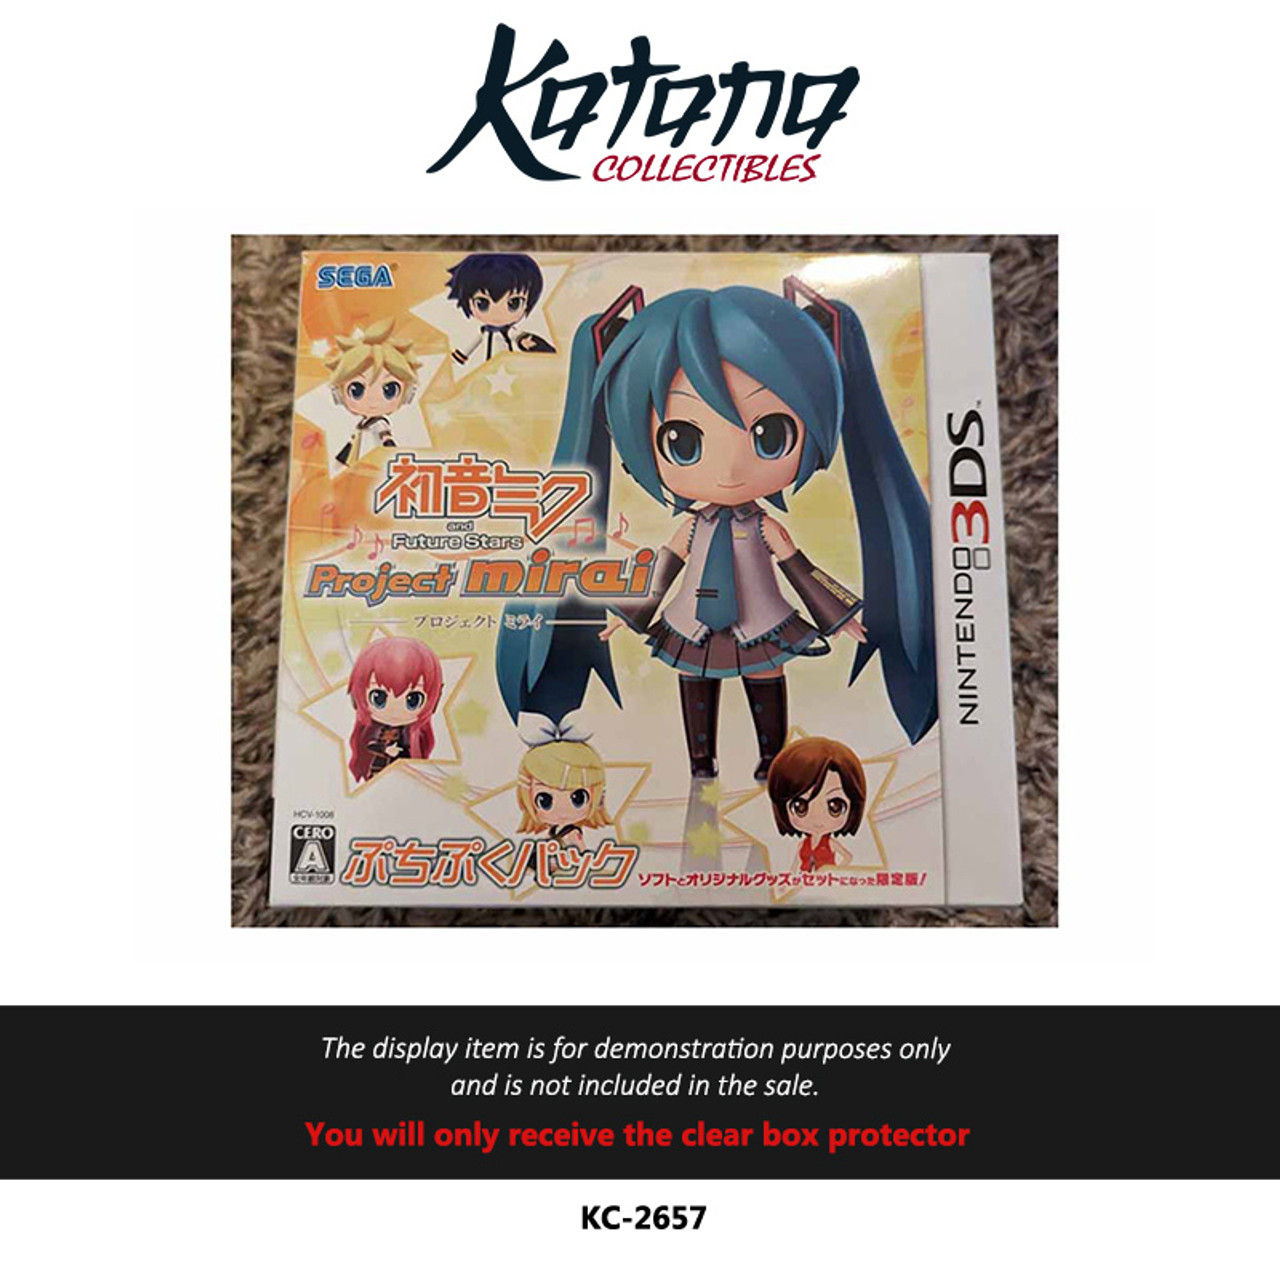 Katana Collectibles Protector For Nintendo 3DS Hatsune Miku and Future Stars: Project Mirai